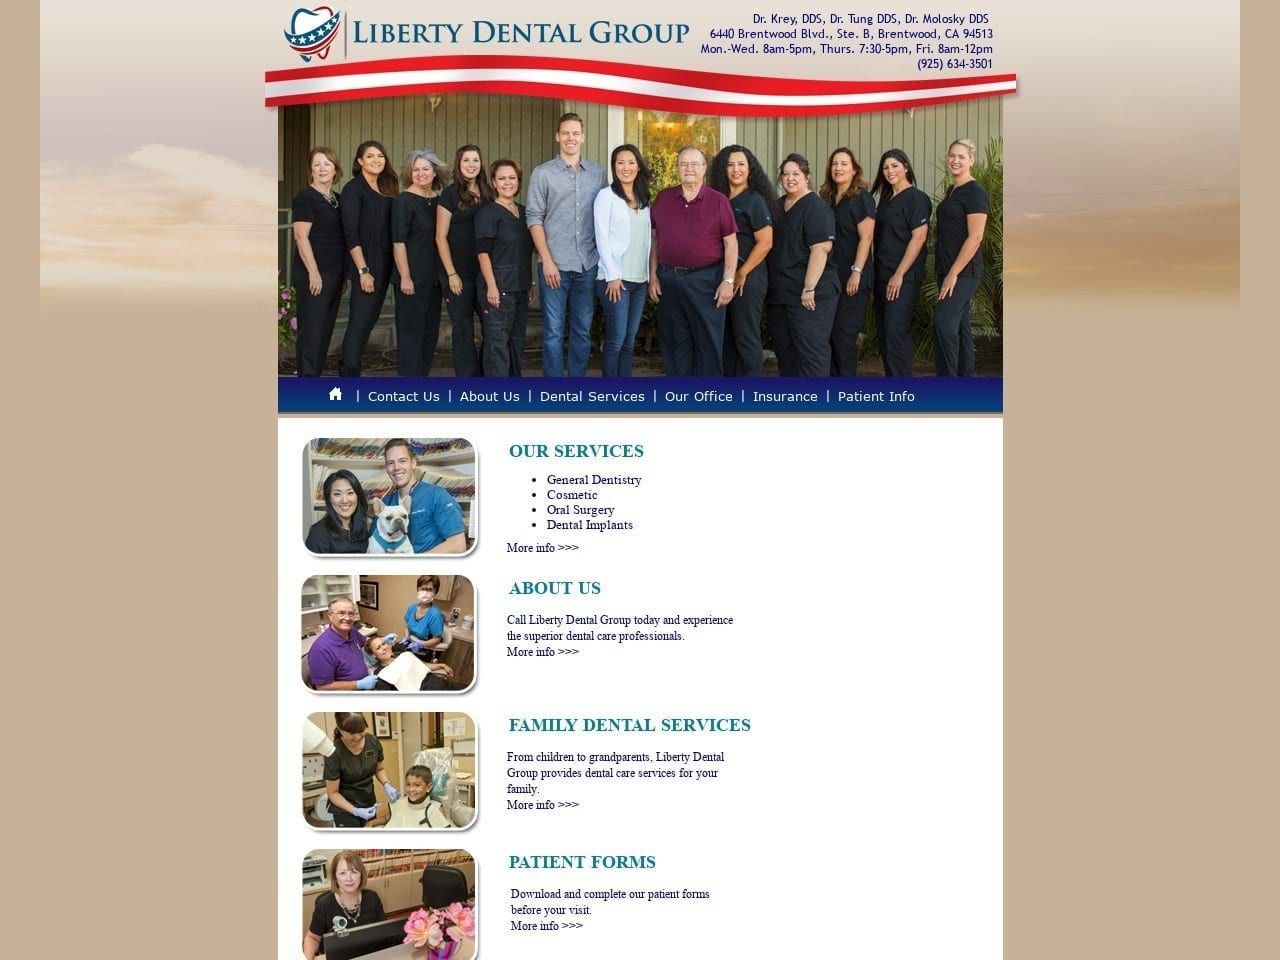 Liberty Dental Group Website Screenshot from visitlibertydental.com